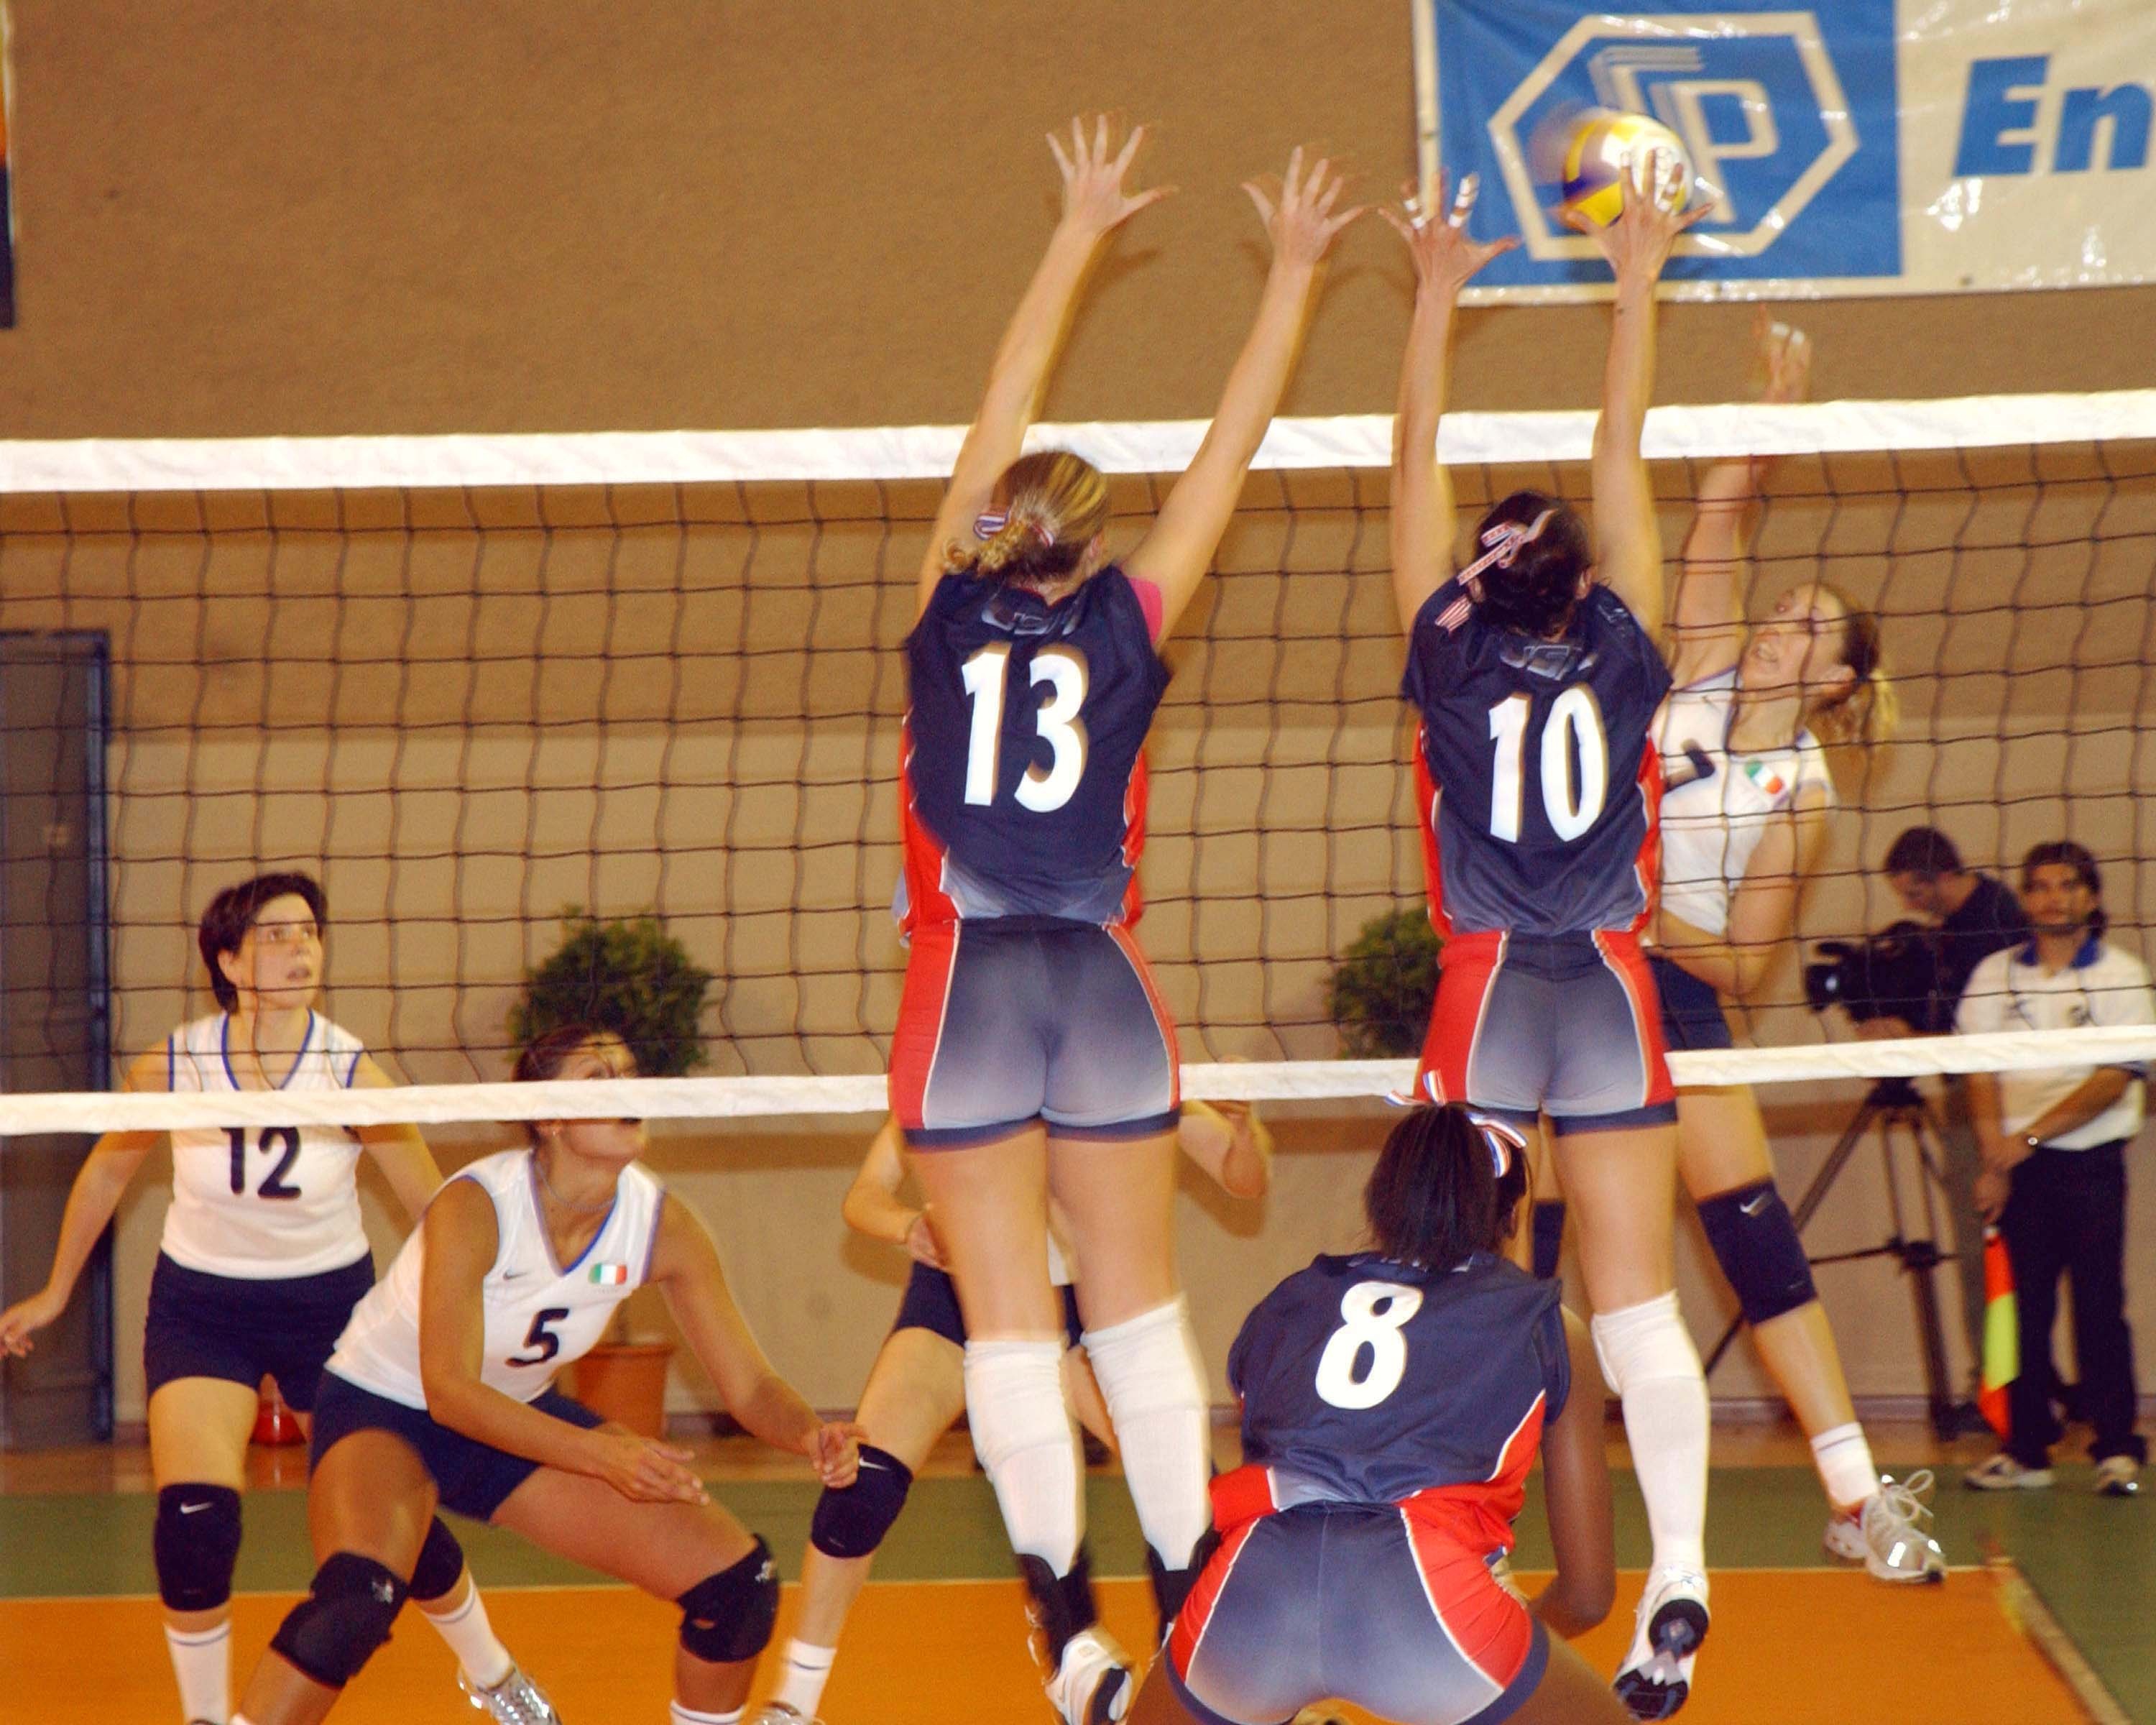 Volleyball Match, Activity, Match, Sport, Thrill, HQ Photo